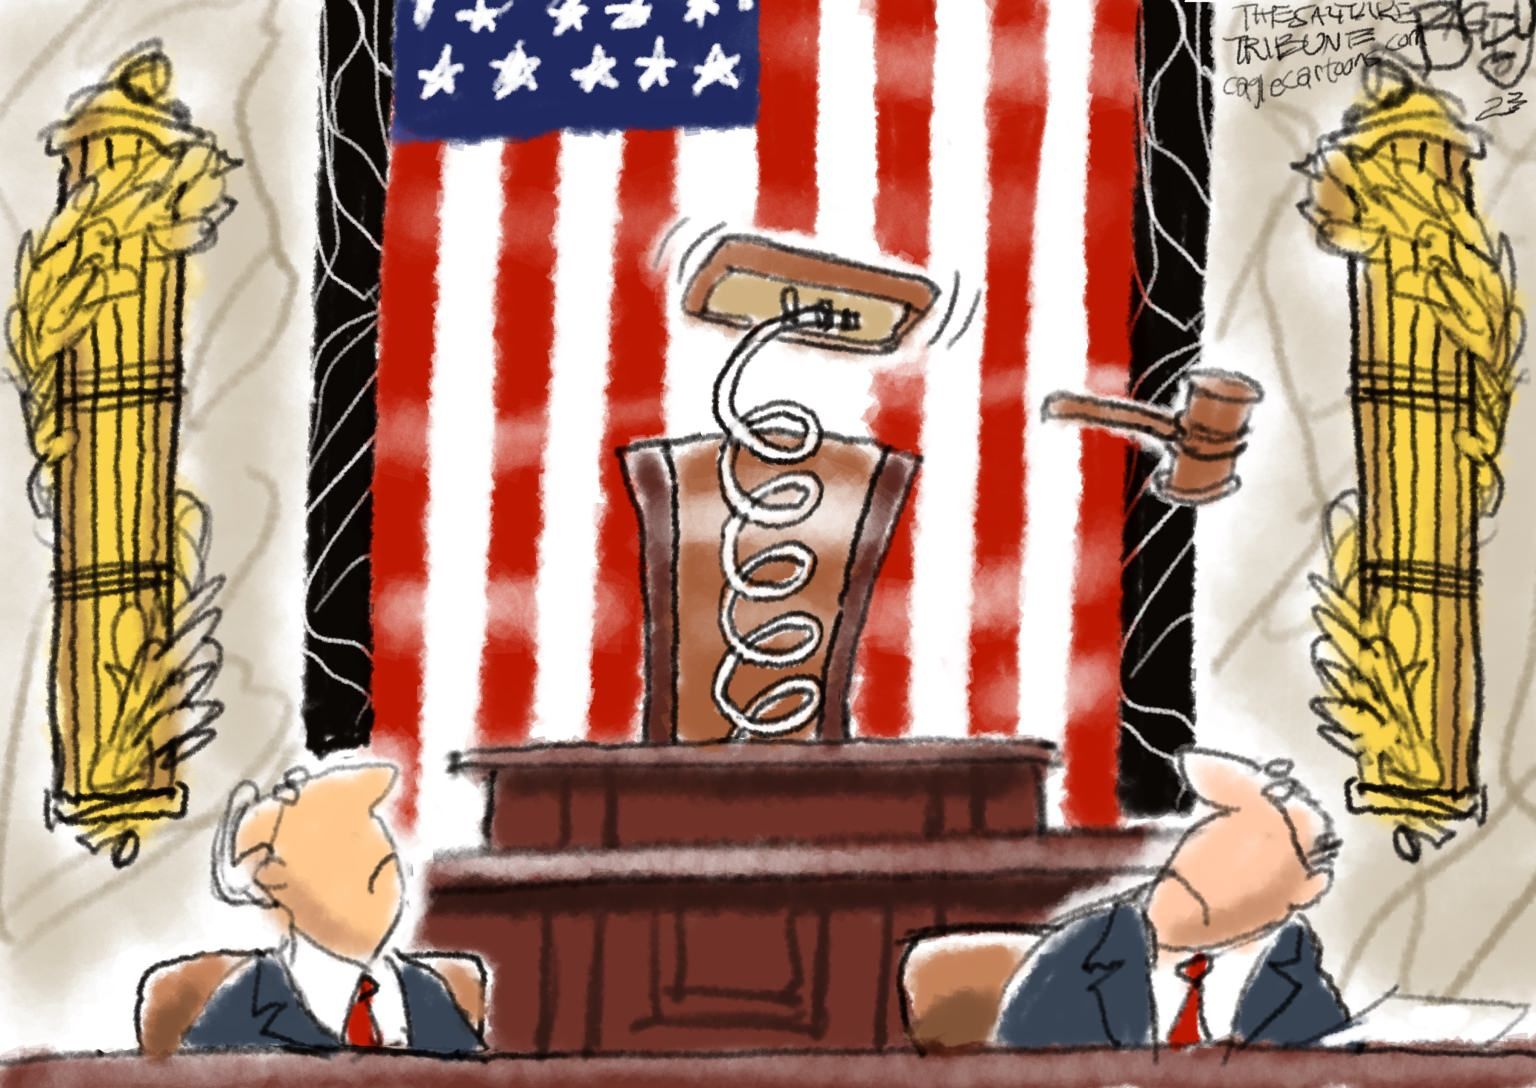 newsjustin.press - political cartoon - Kevin Ejection by Pat Bagley, The Salt Lake Tribune, UT